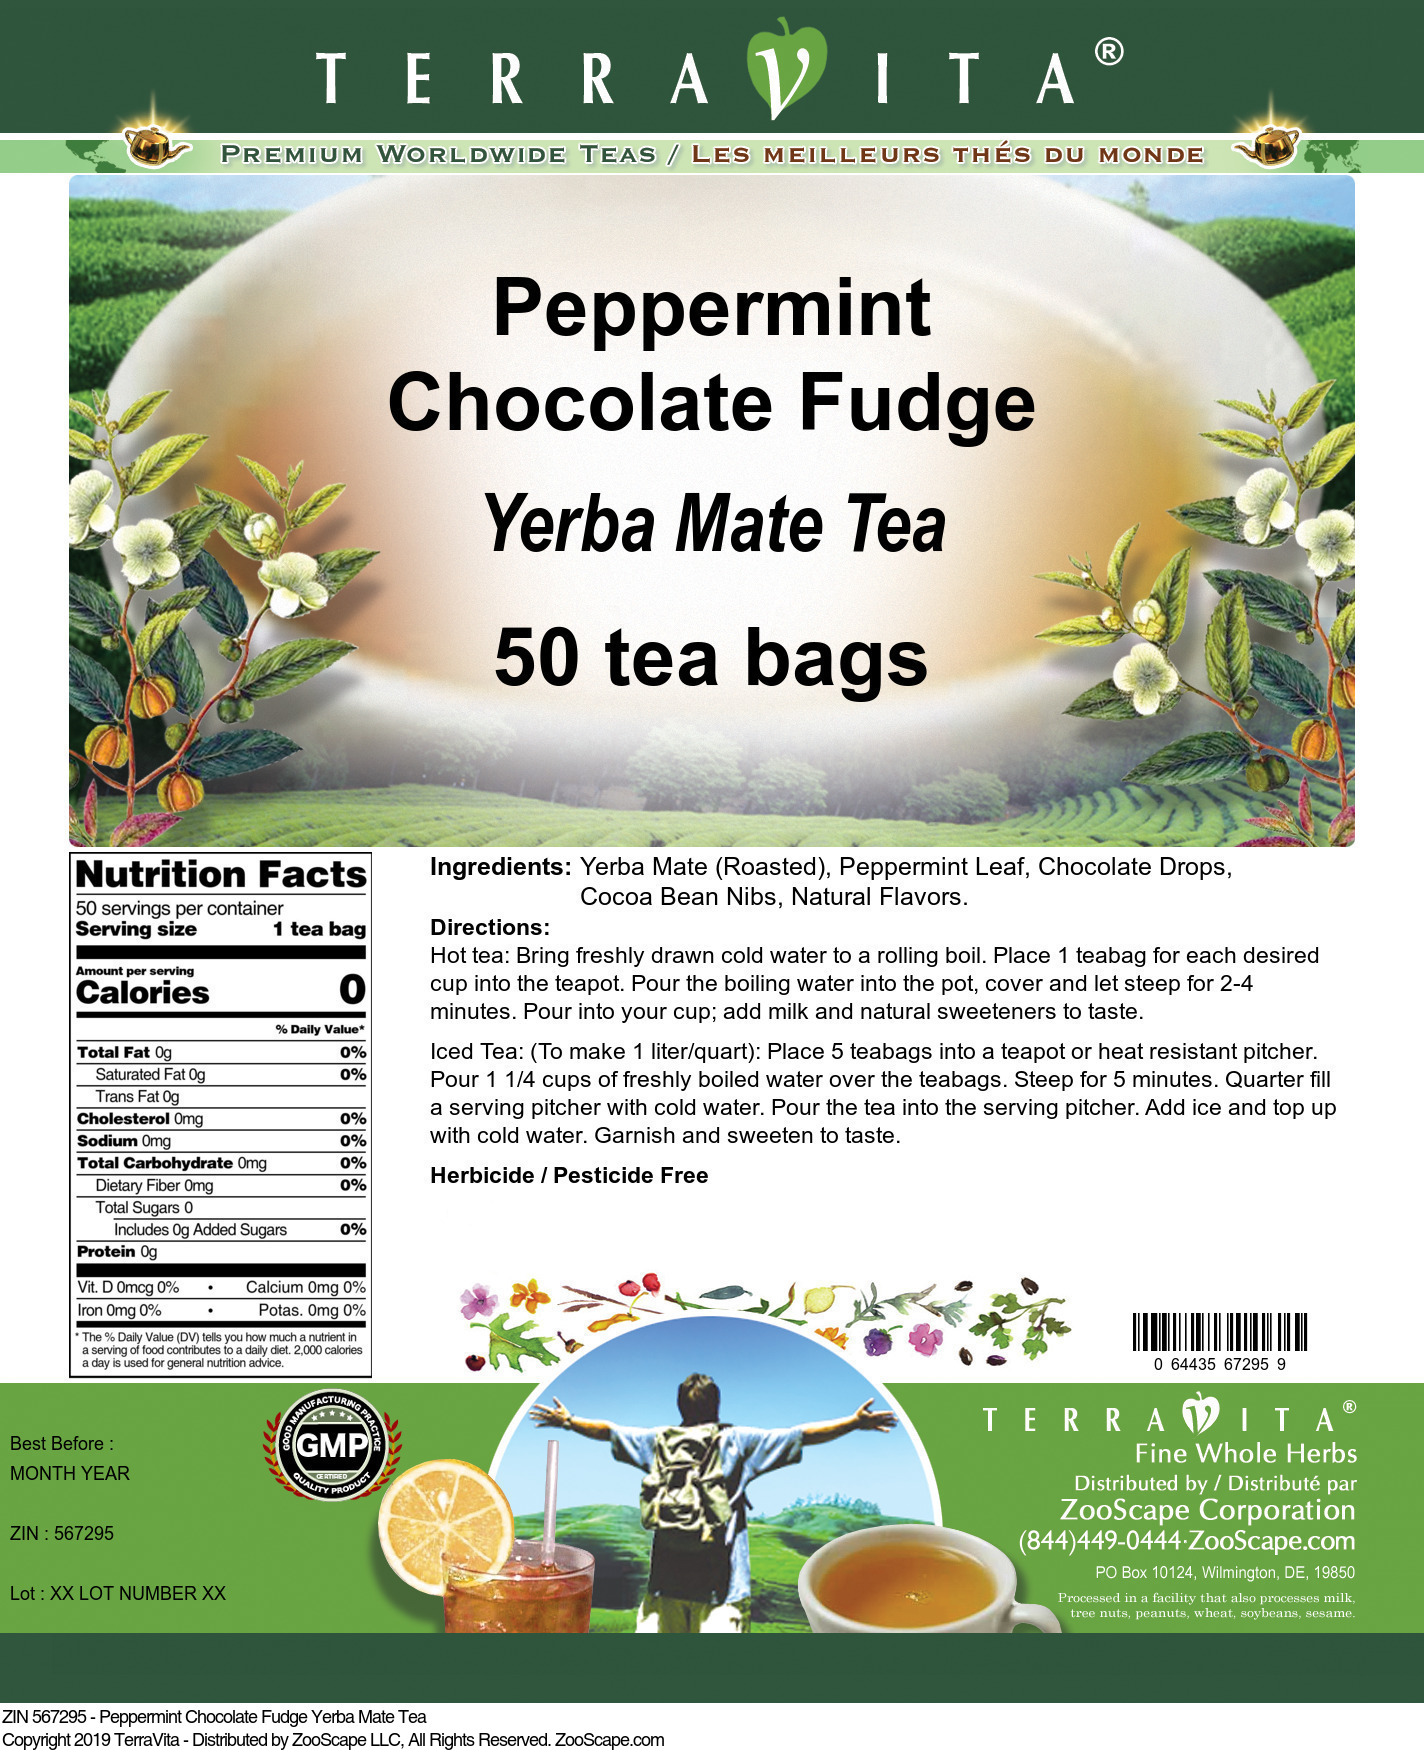 Peppermint Chocolate Fudge Yerba Mate Tea - Label